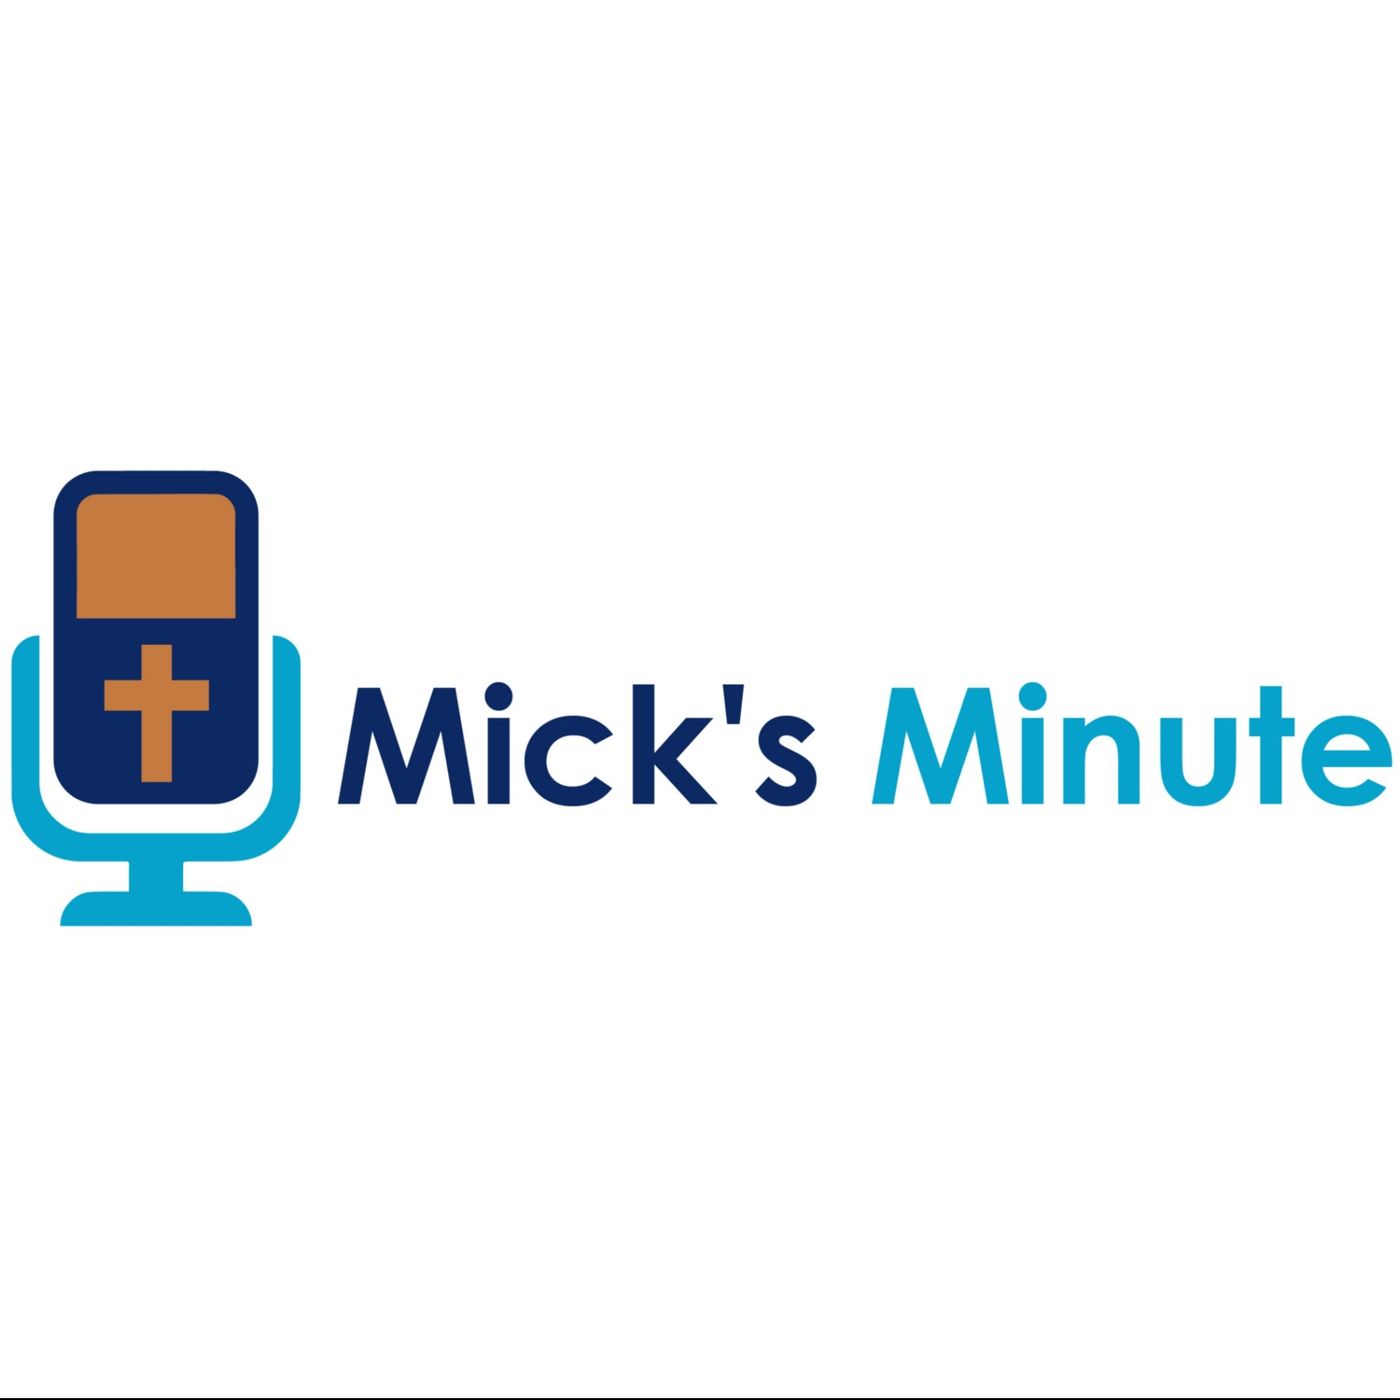 Mick's Minute